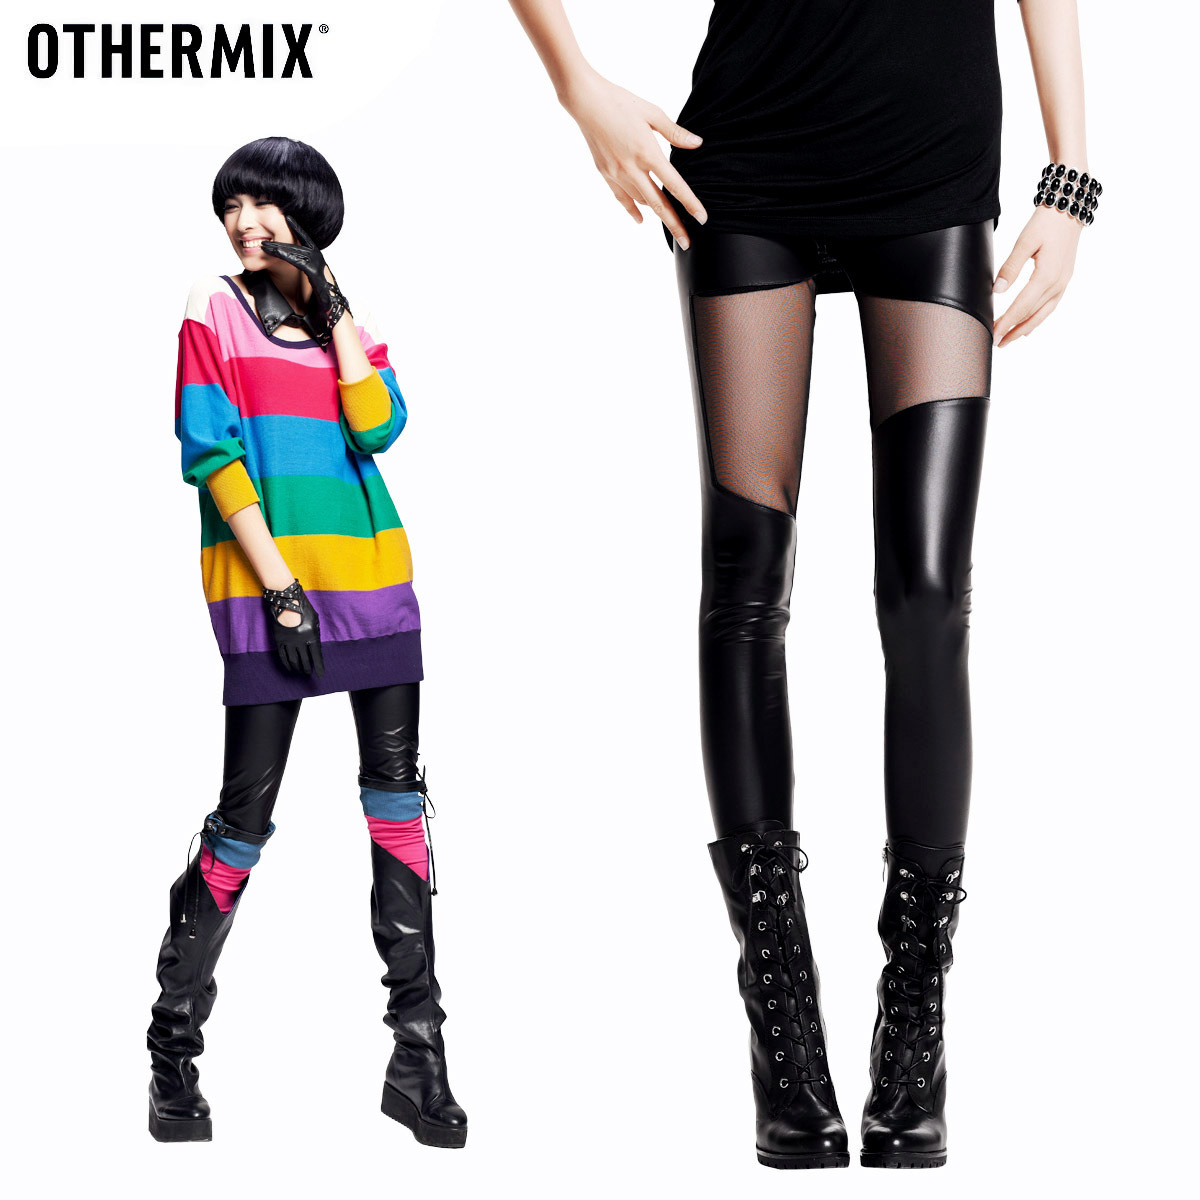 Othermix Women's Sexy Legging Gauze Black PU Faux Leather  Fashion Personality 12t10026